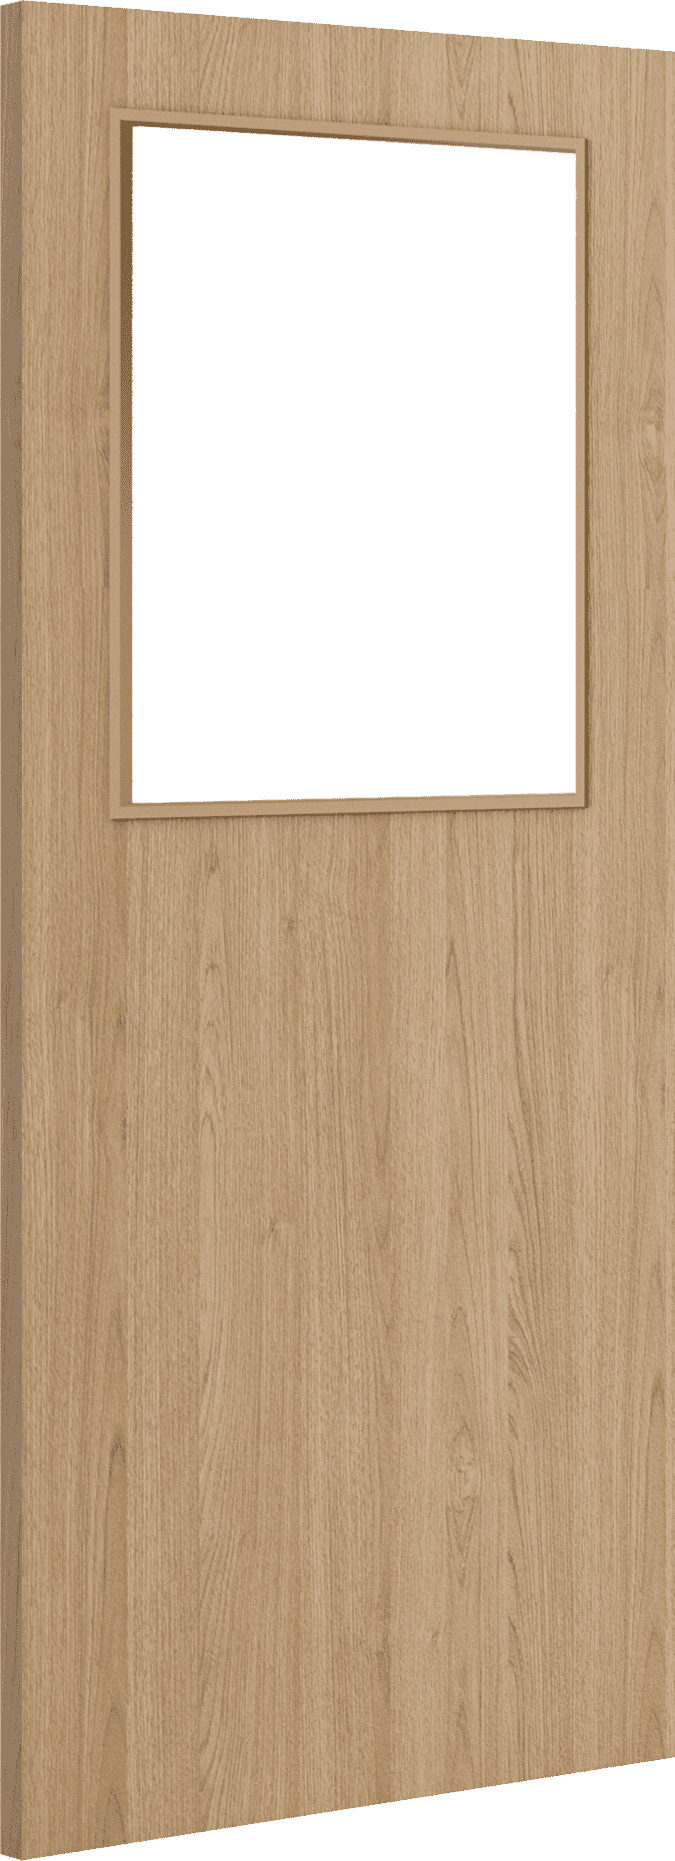 1981mm x 838mm x 44mm (33") Architectural Oak 01 Frosted Glazed - Prefinished FD30 Fire Door Blank